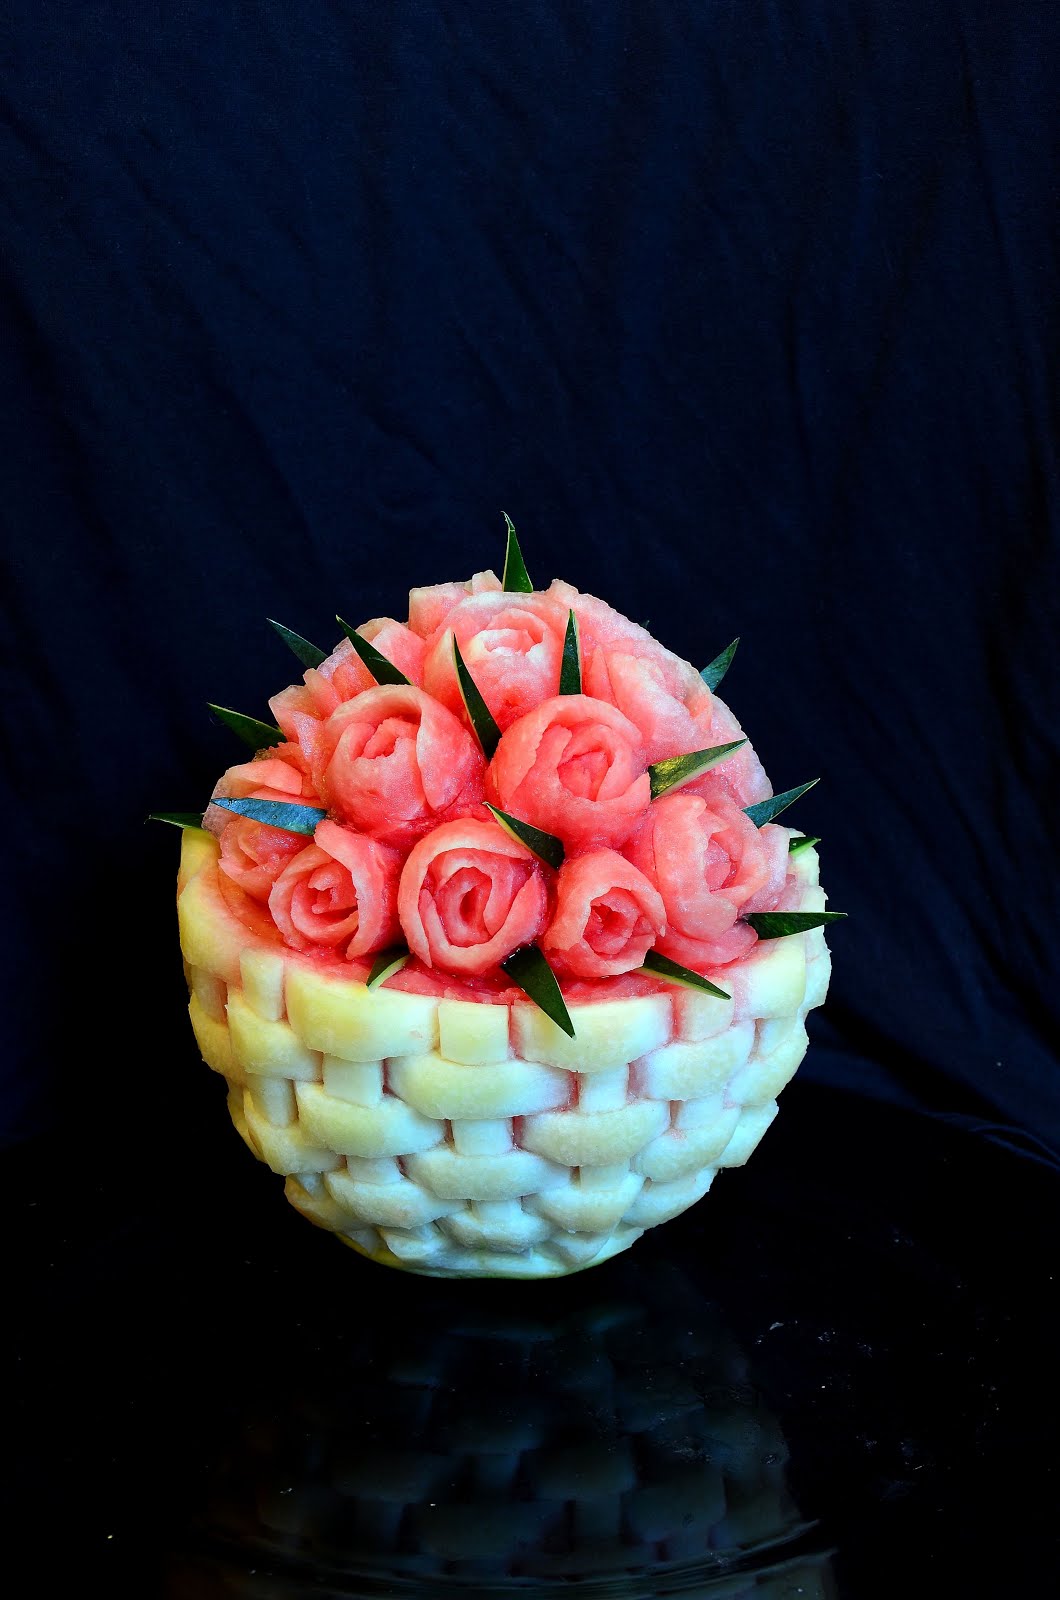 Roses in Basket